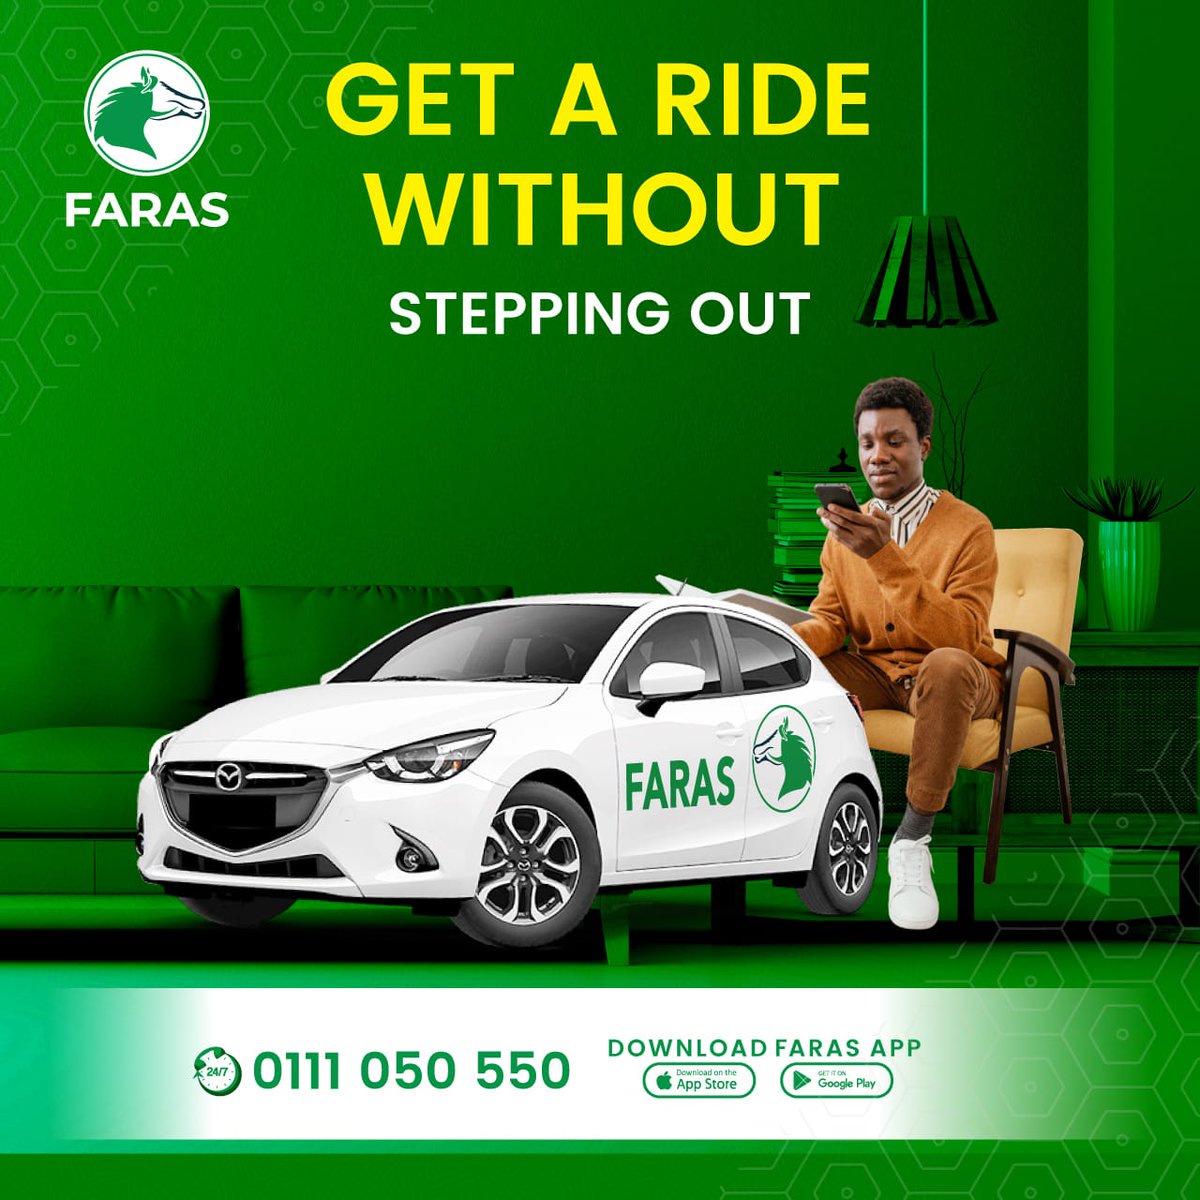 The best ahead of the rest!
@farasKenya offers the best ride with rewards from ten trips.
Down the FARAS APP from google app store and start enjoying rewarding rides.
#FarasLoyaltyAwards